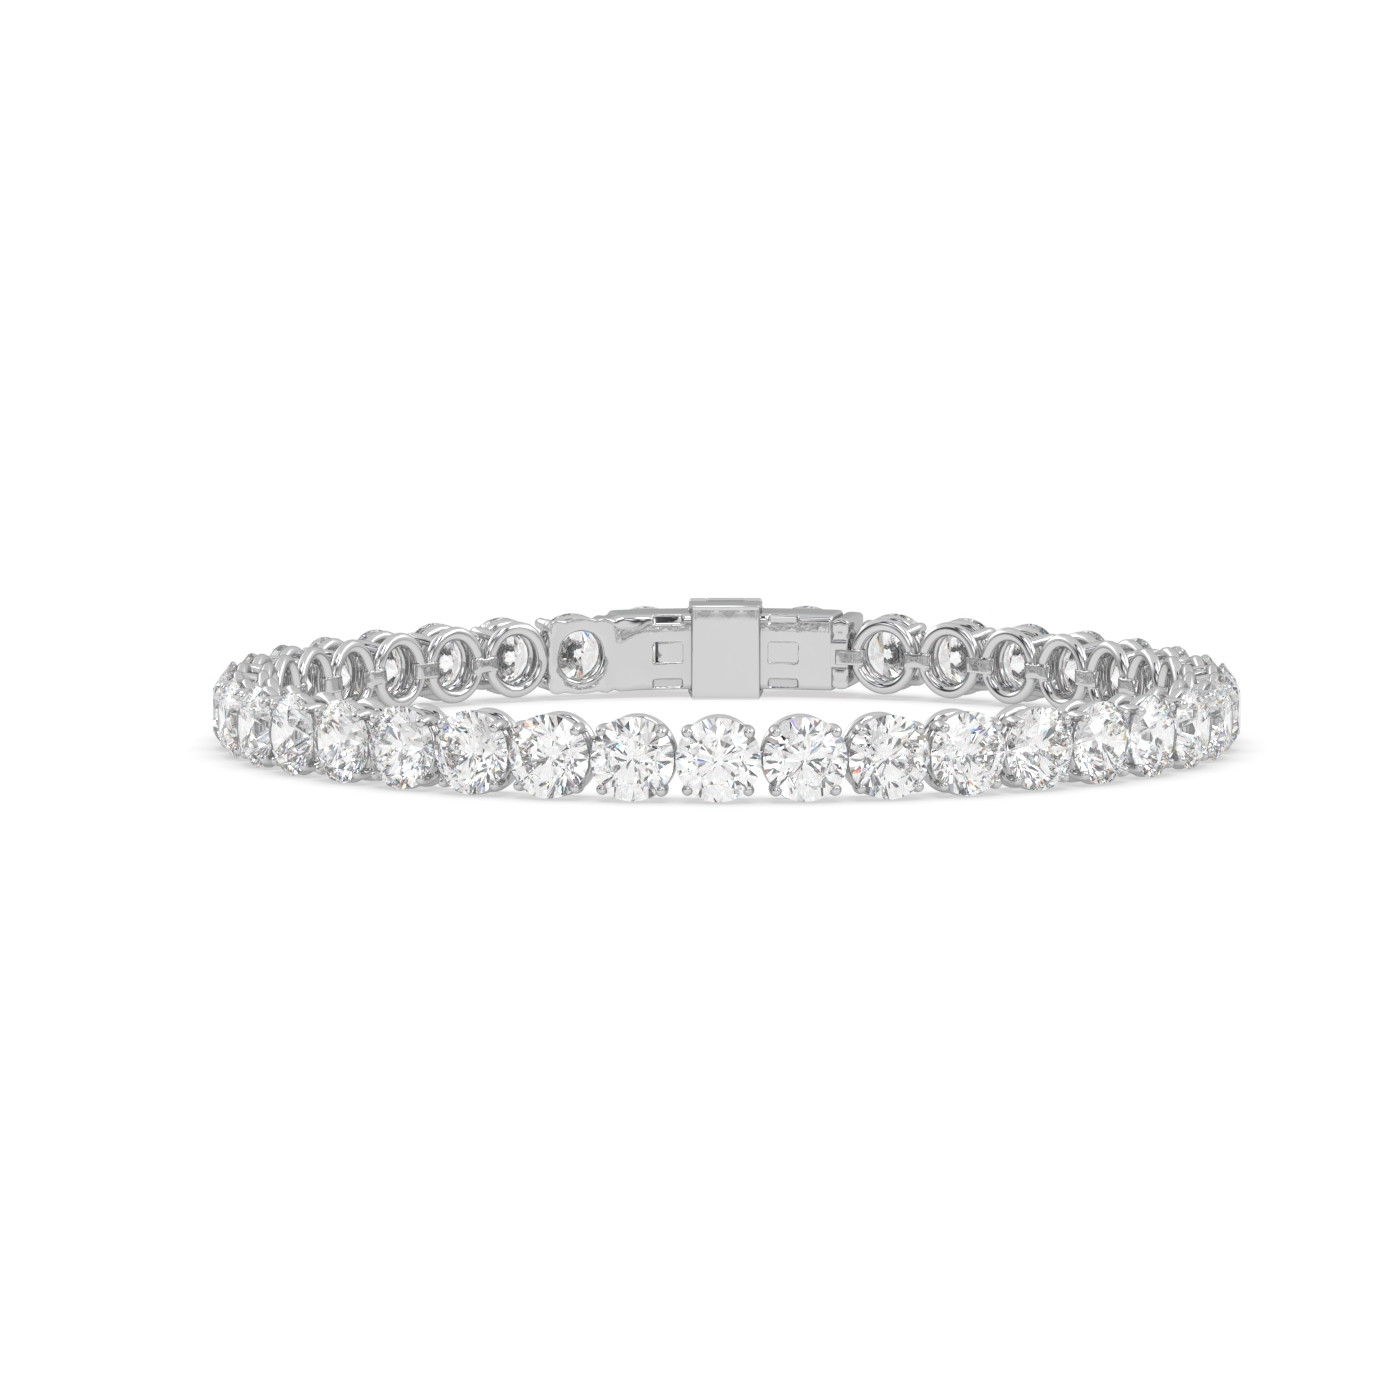 18k rose gold 14 carat round diamond tennis bracelet with modern american lock system Photos & images